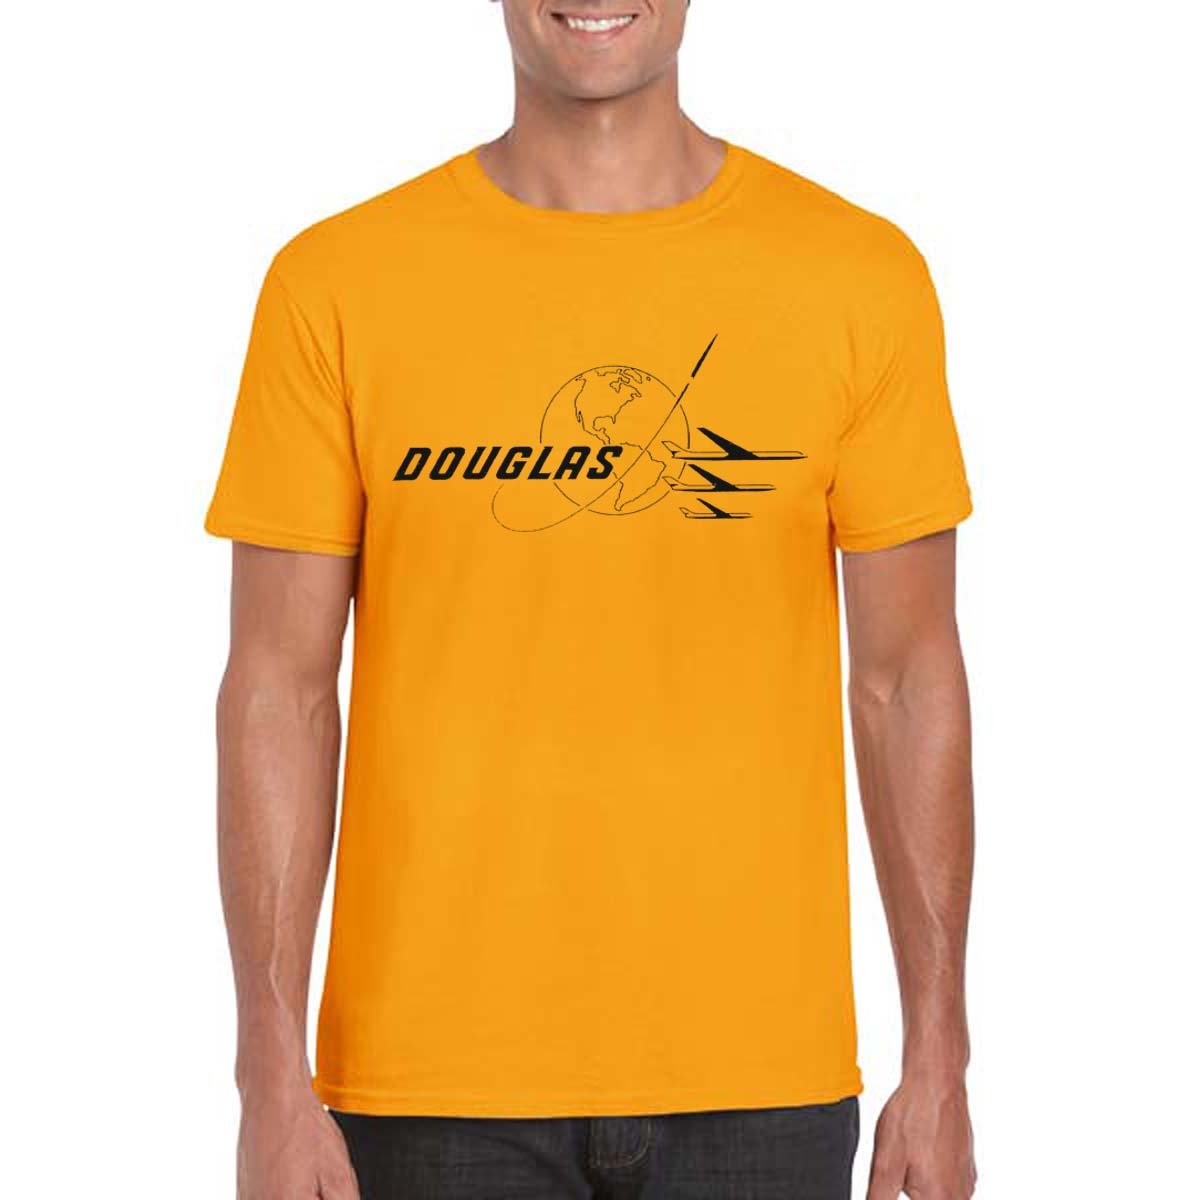 DOUGLAS RETRO Logo Unisex T-shirt